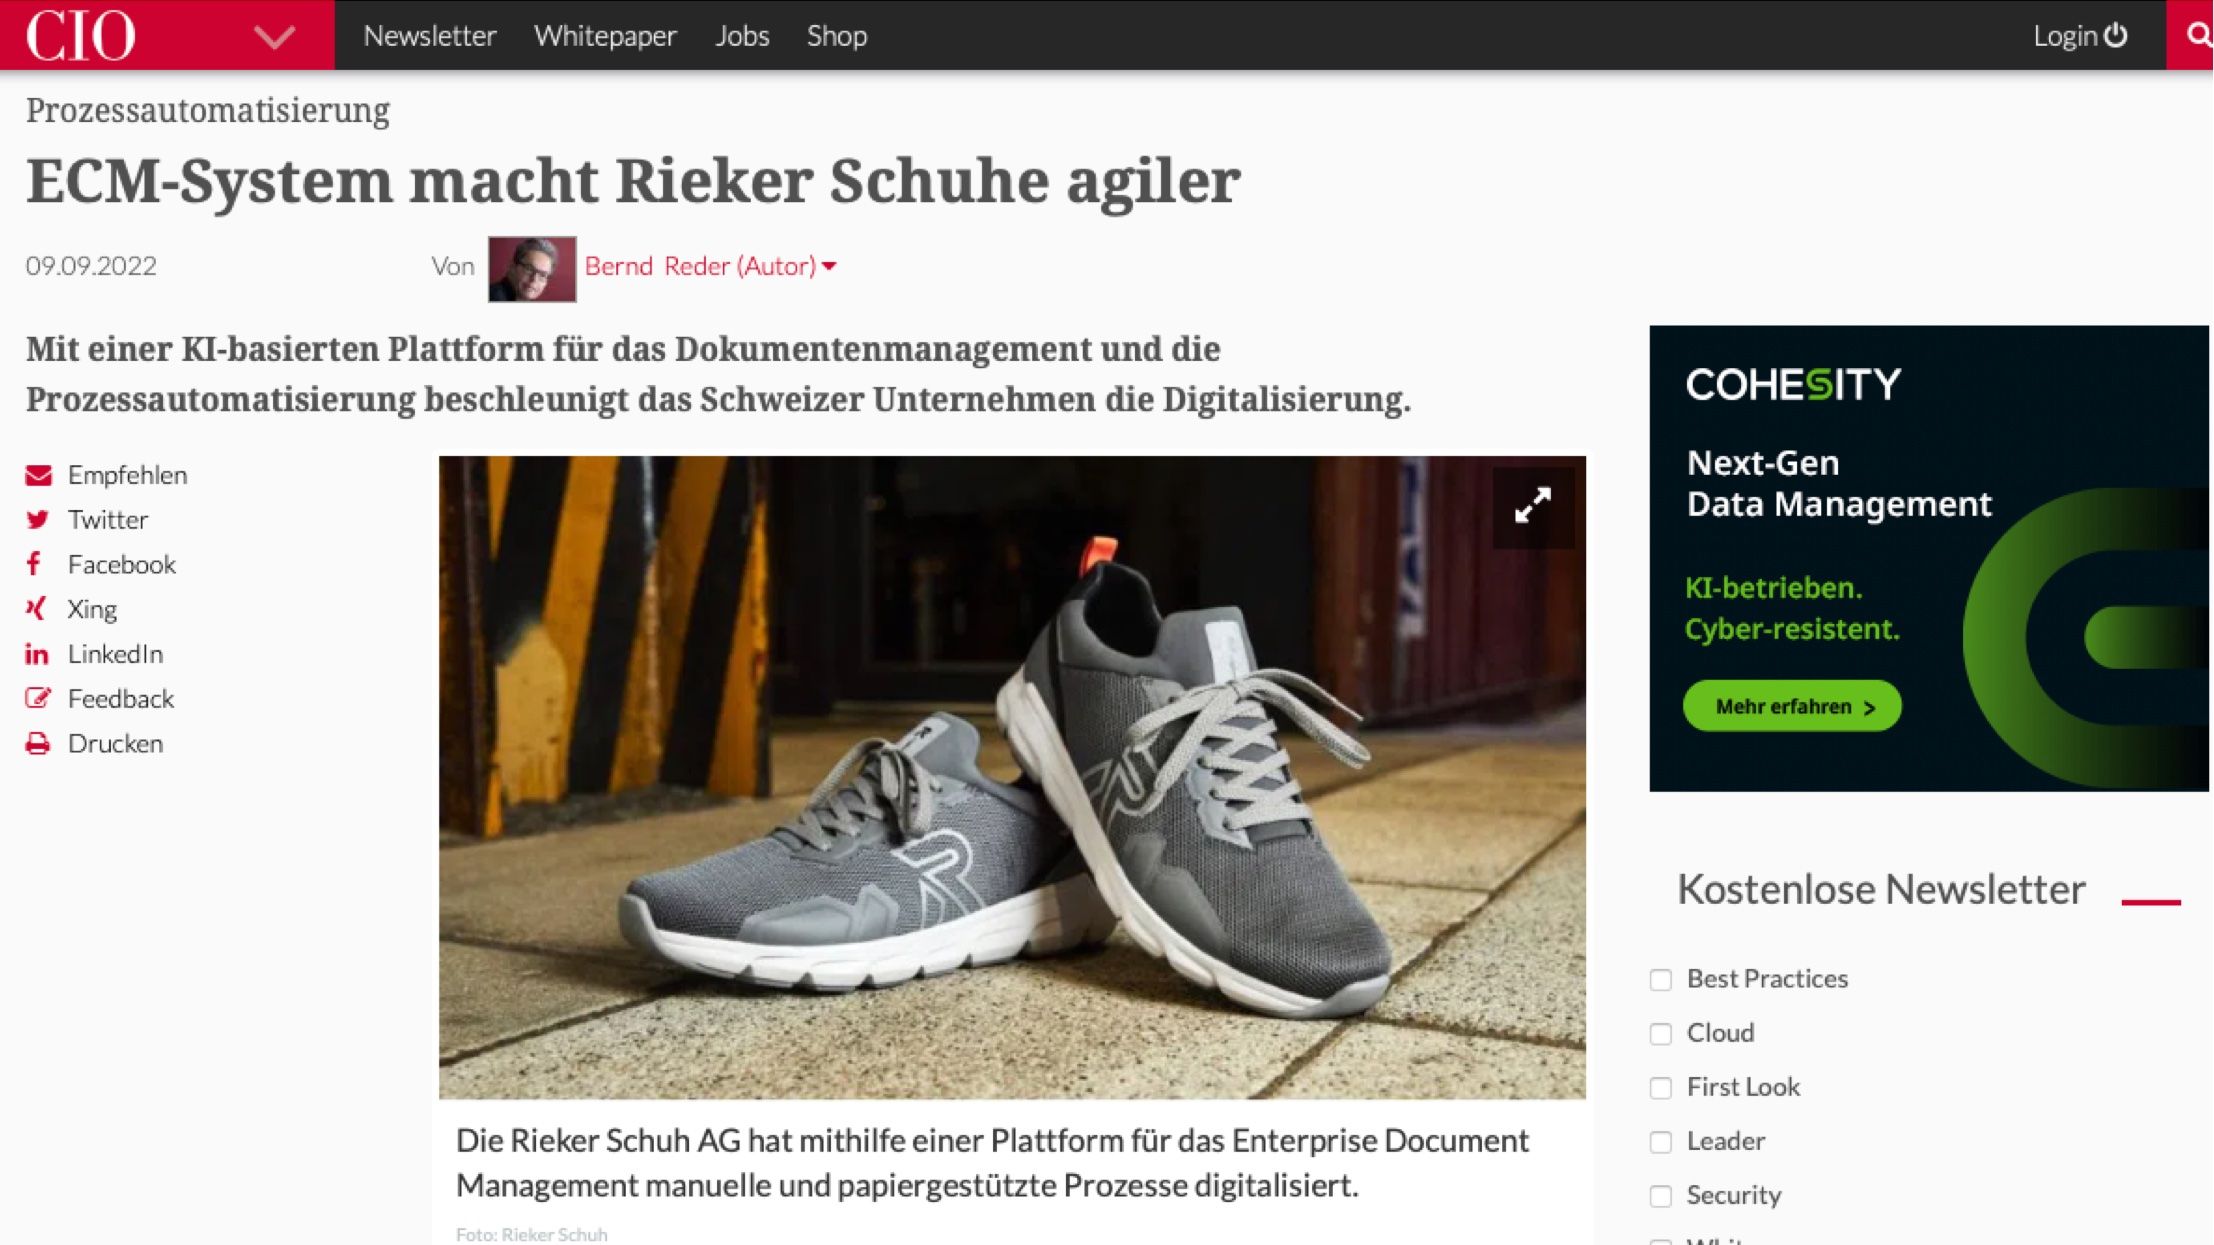 Artikel "ECM-System macht Rieker Schuhe agiler" im CIO Magazin